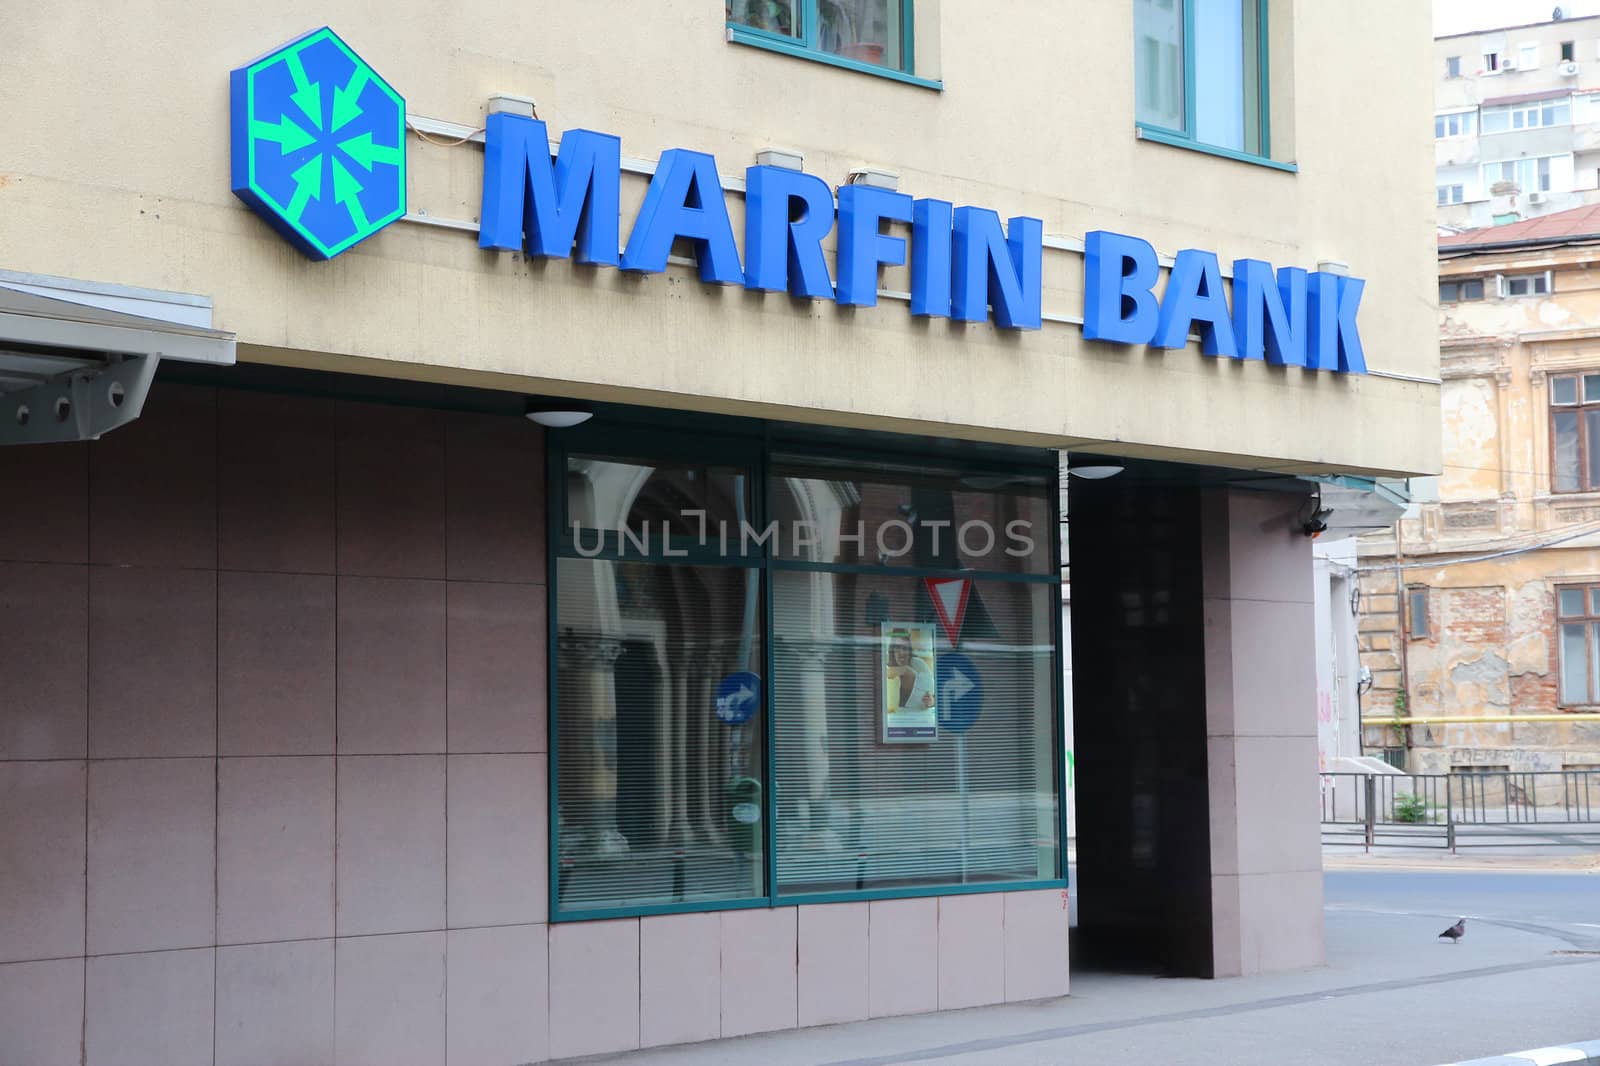 Marfin Bank by tupungato